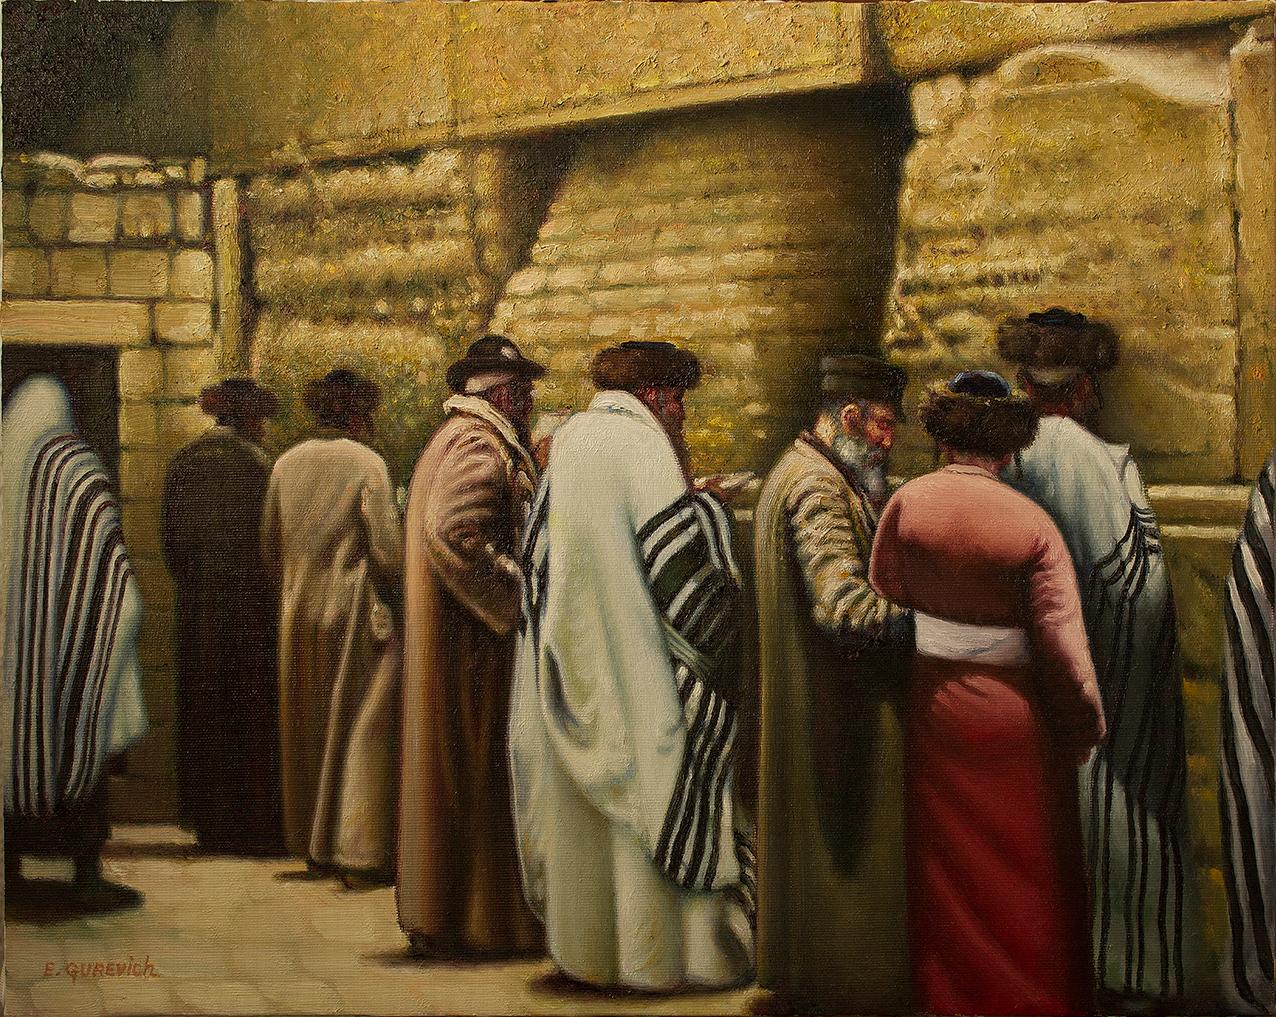 Eduard Gurevich Portrait Painting - Pilgrims at the Western Wall (Judaica)